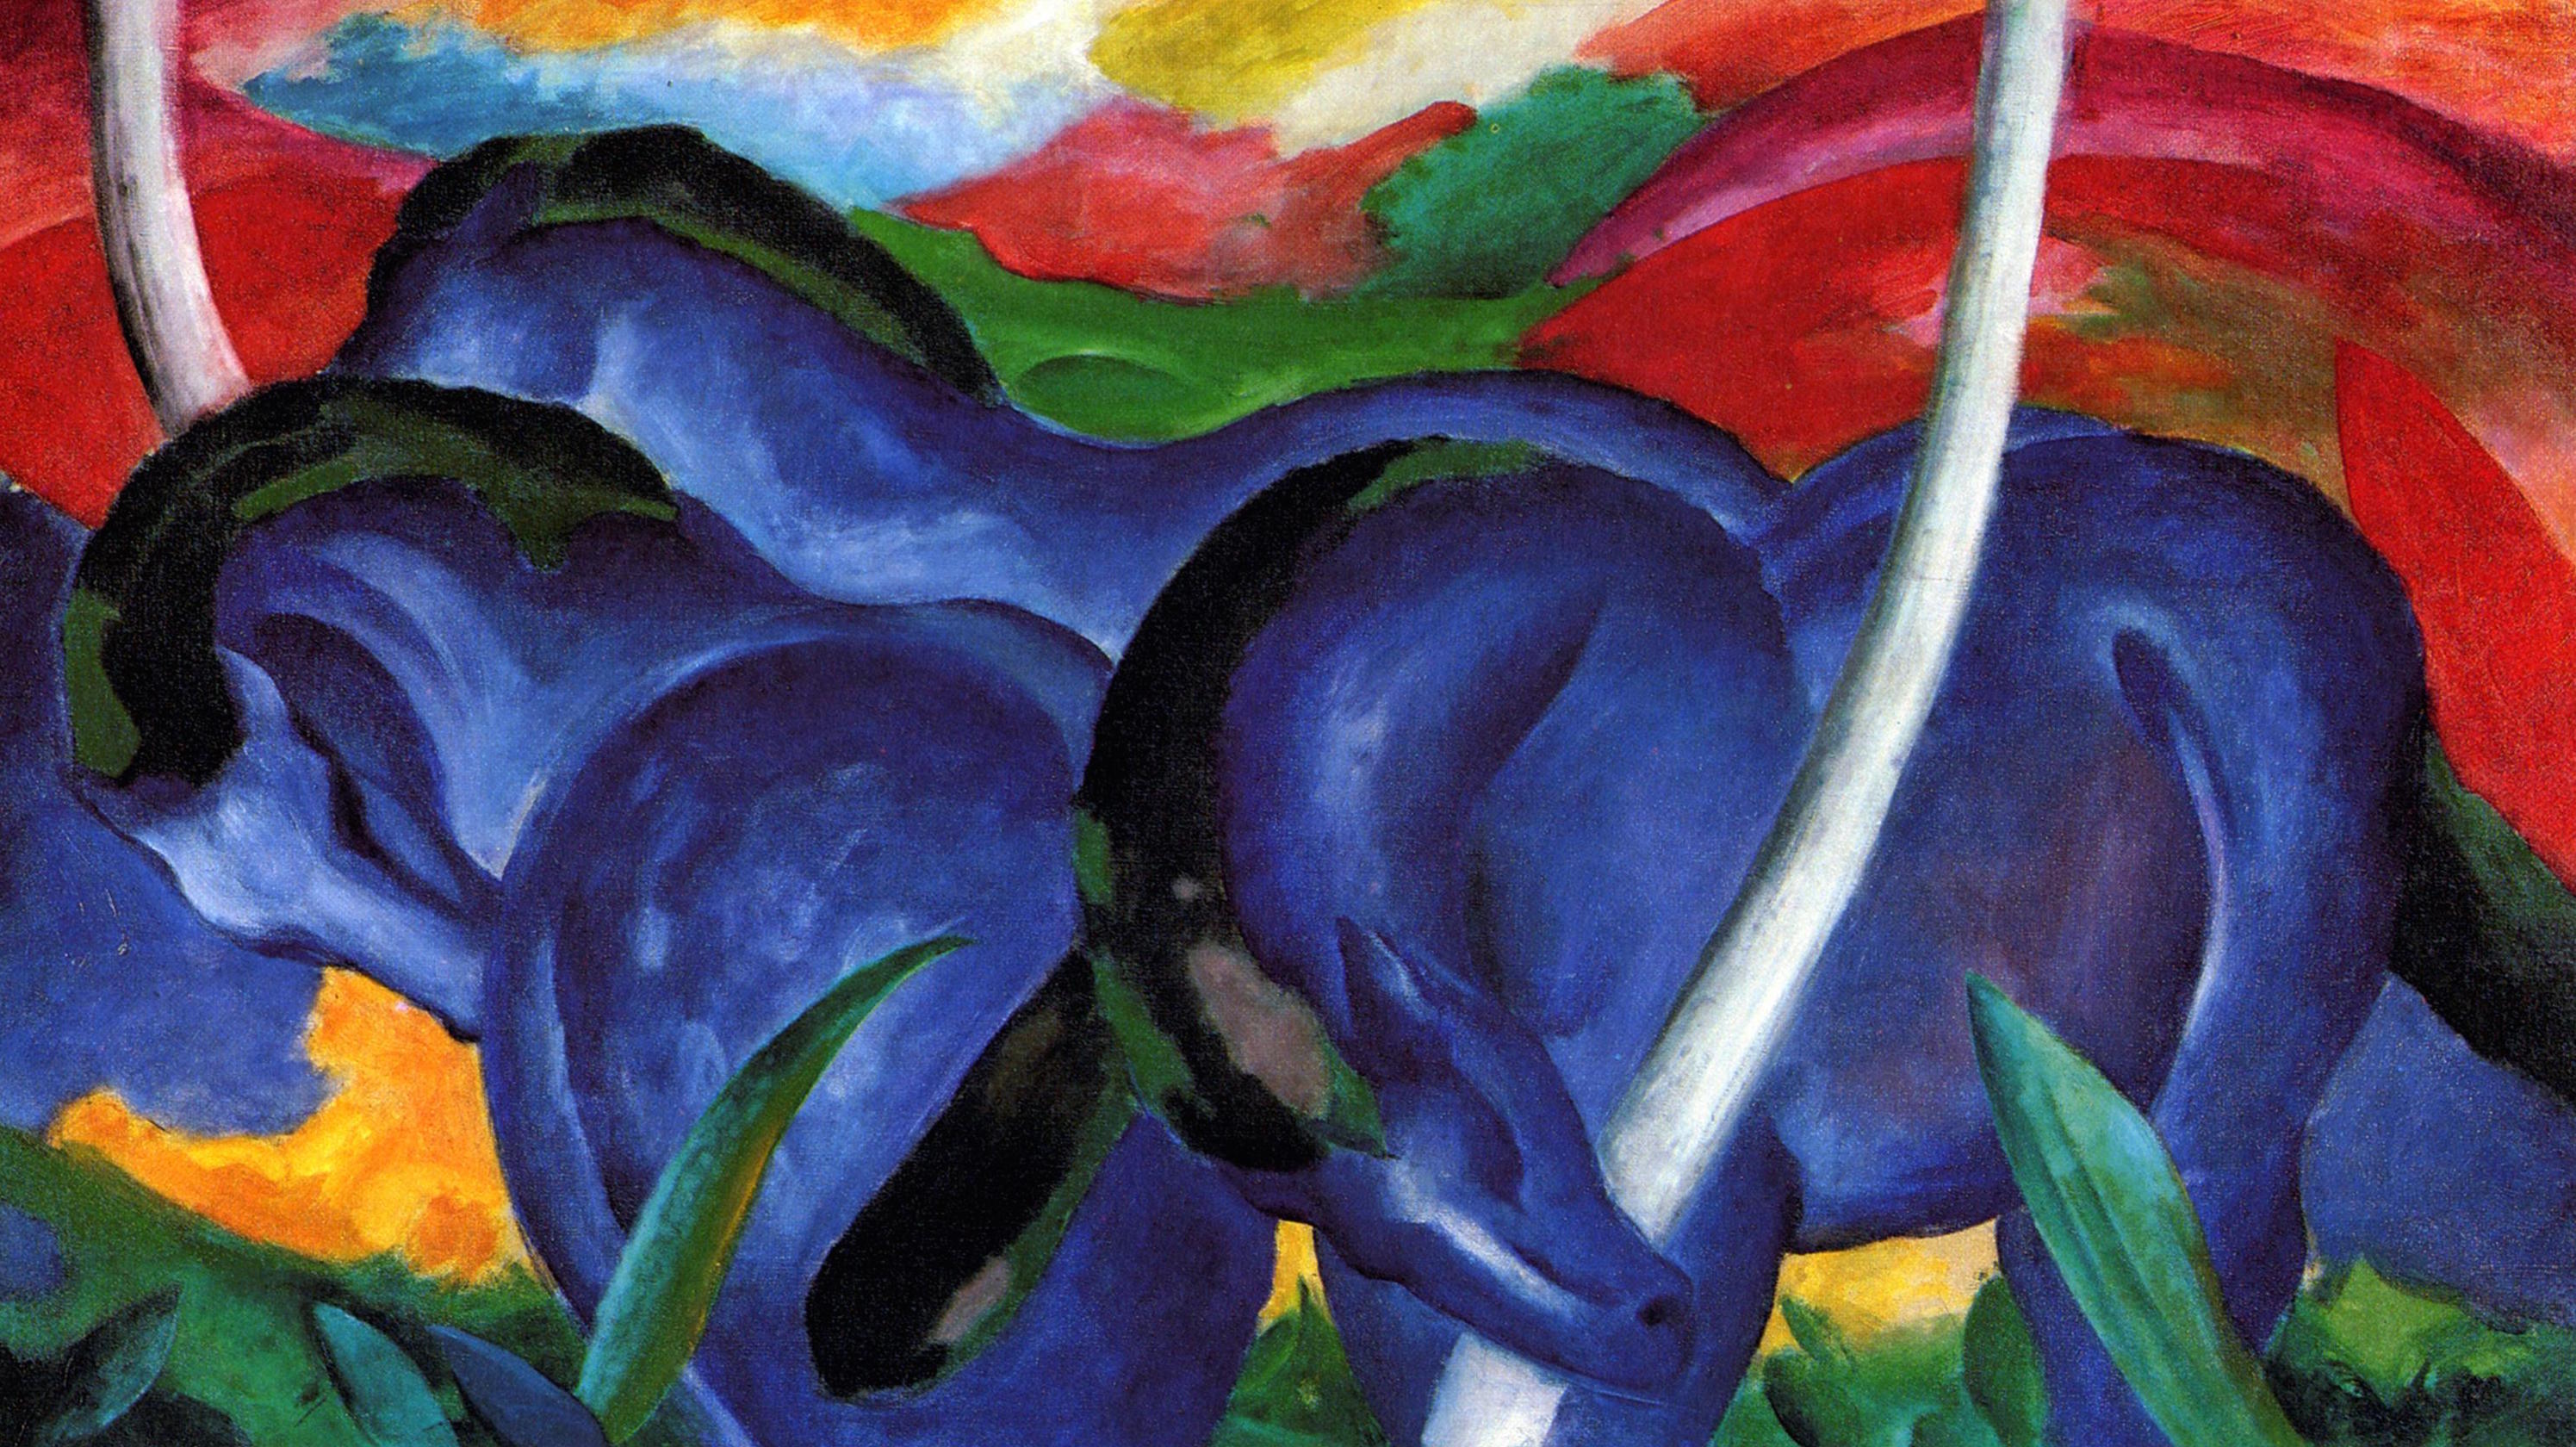 Grandes caballos azules by Franz Marc - 1911 - 41.625 x 71.3125 pulgadas Walker Art Center